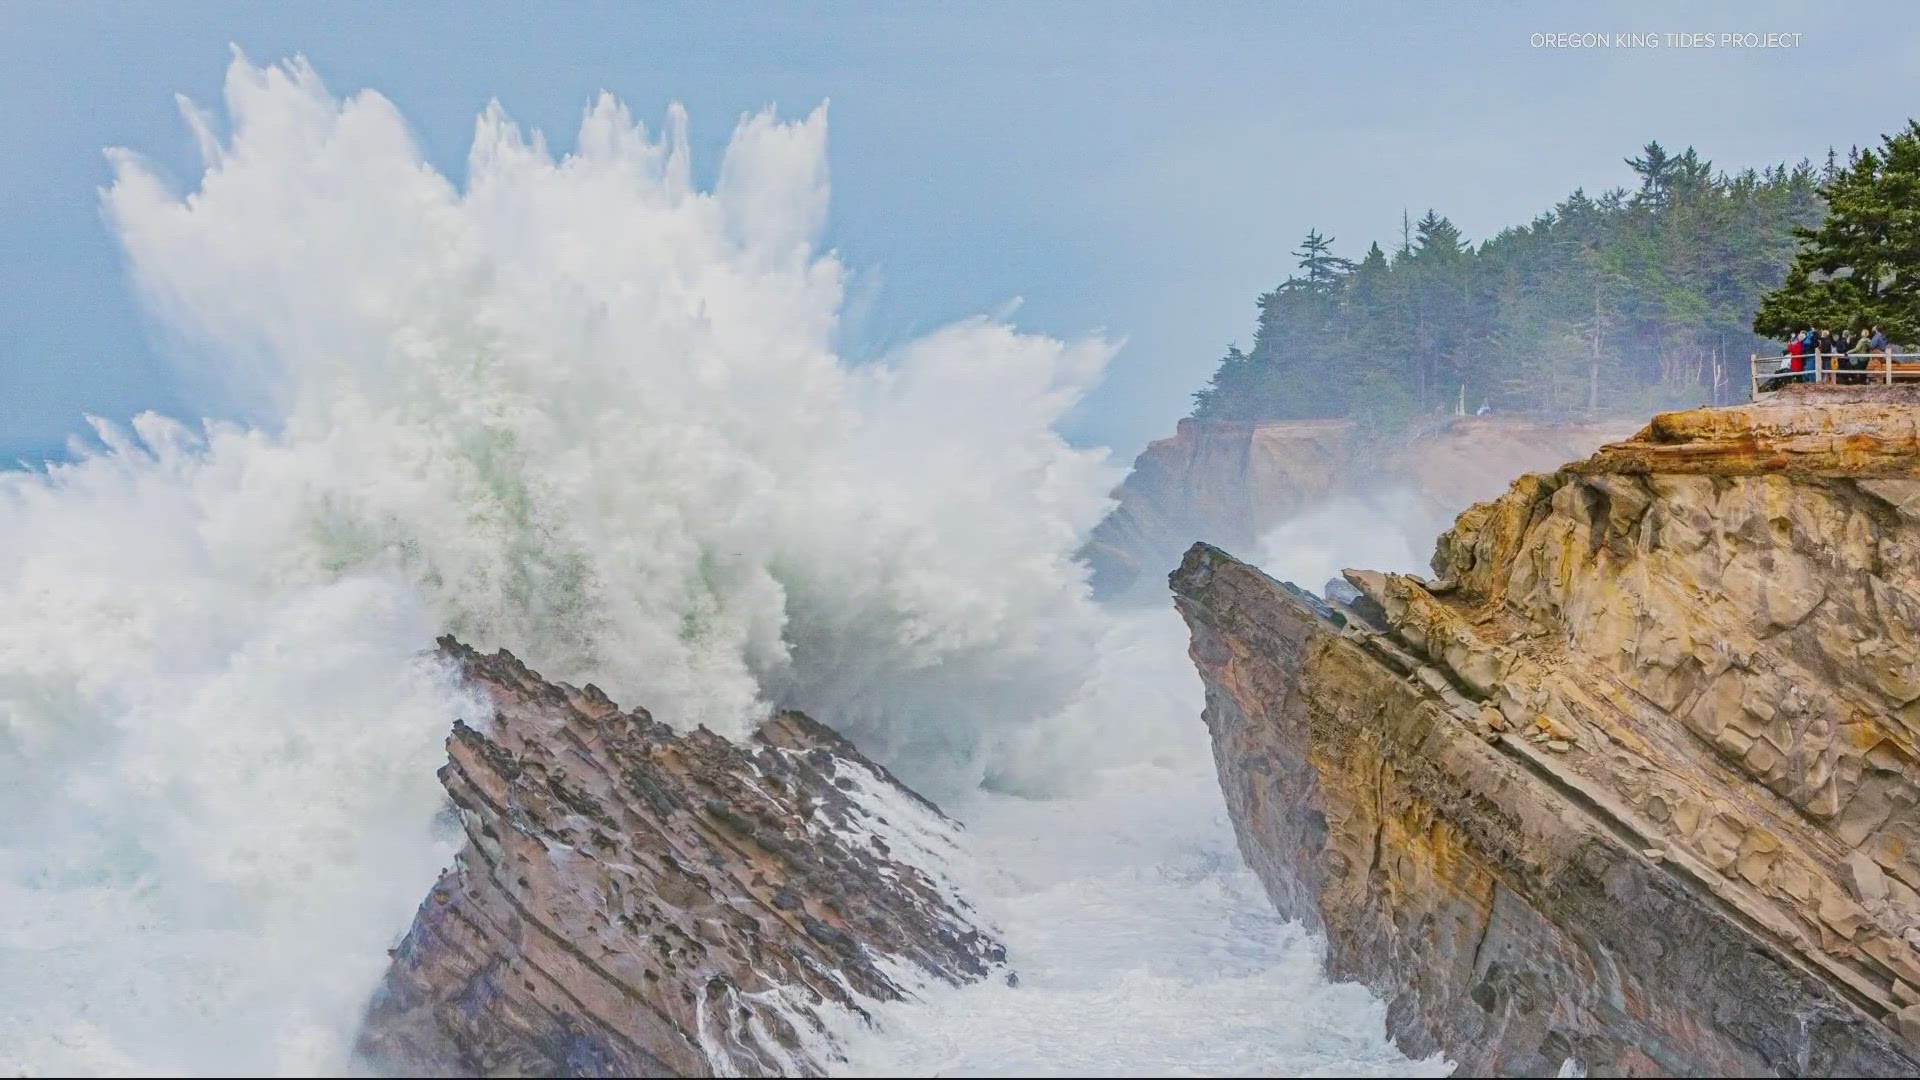 King tides hit the Oregon coast again in January and February